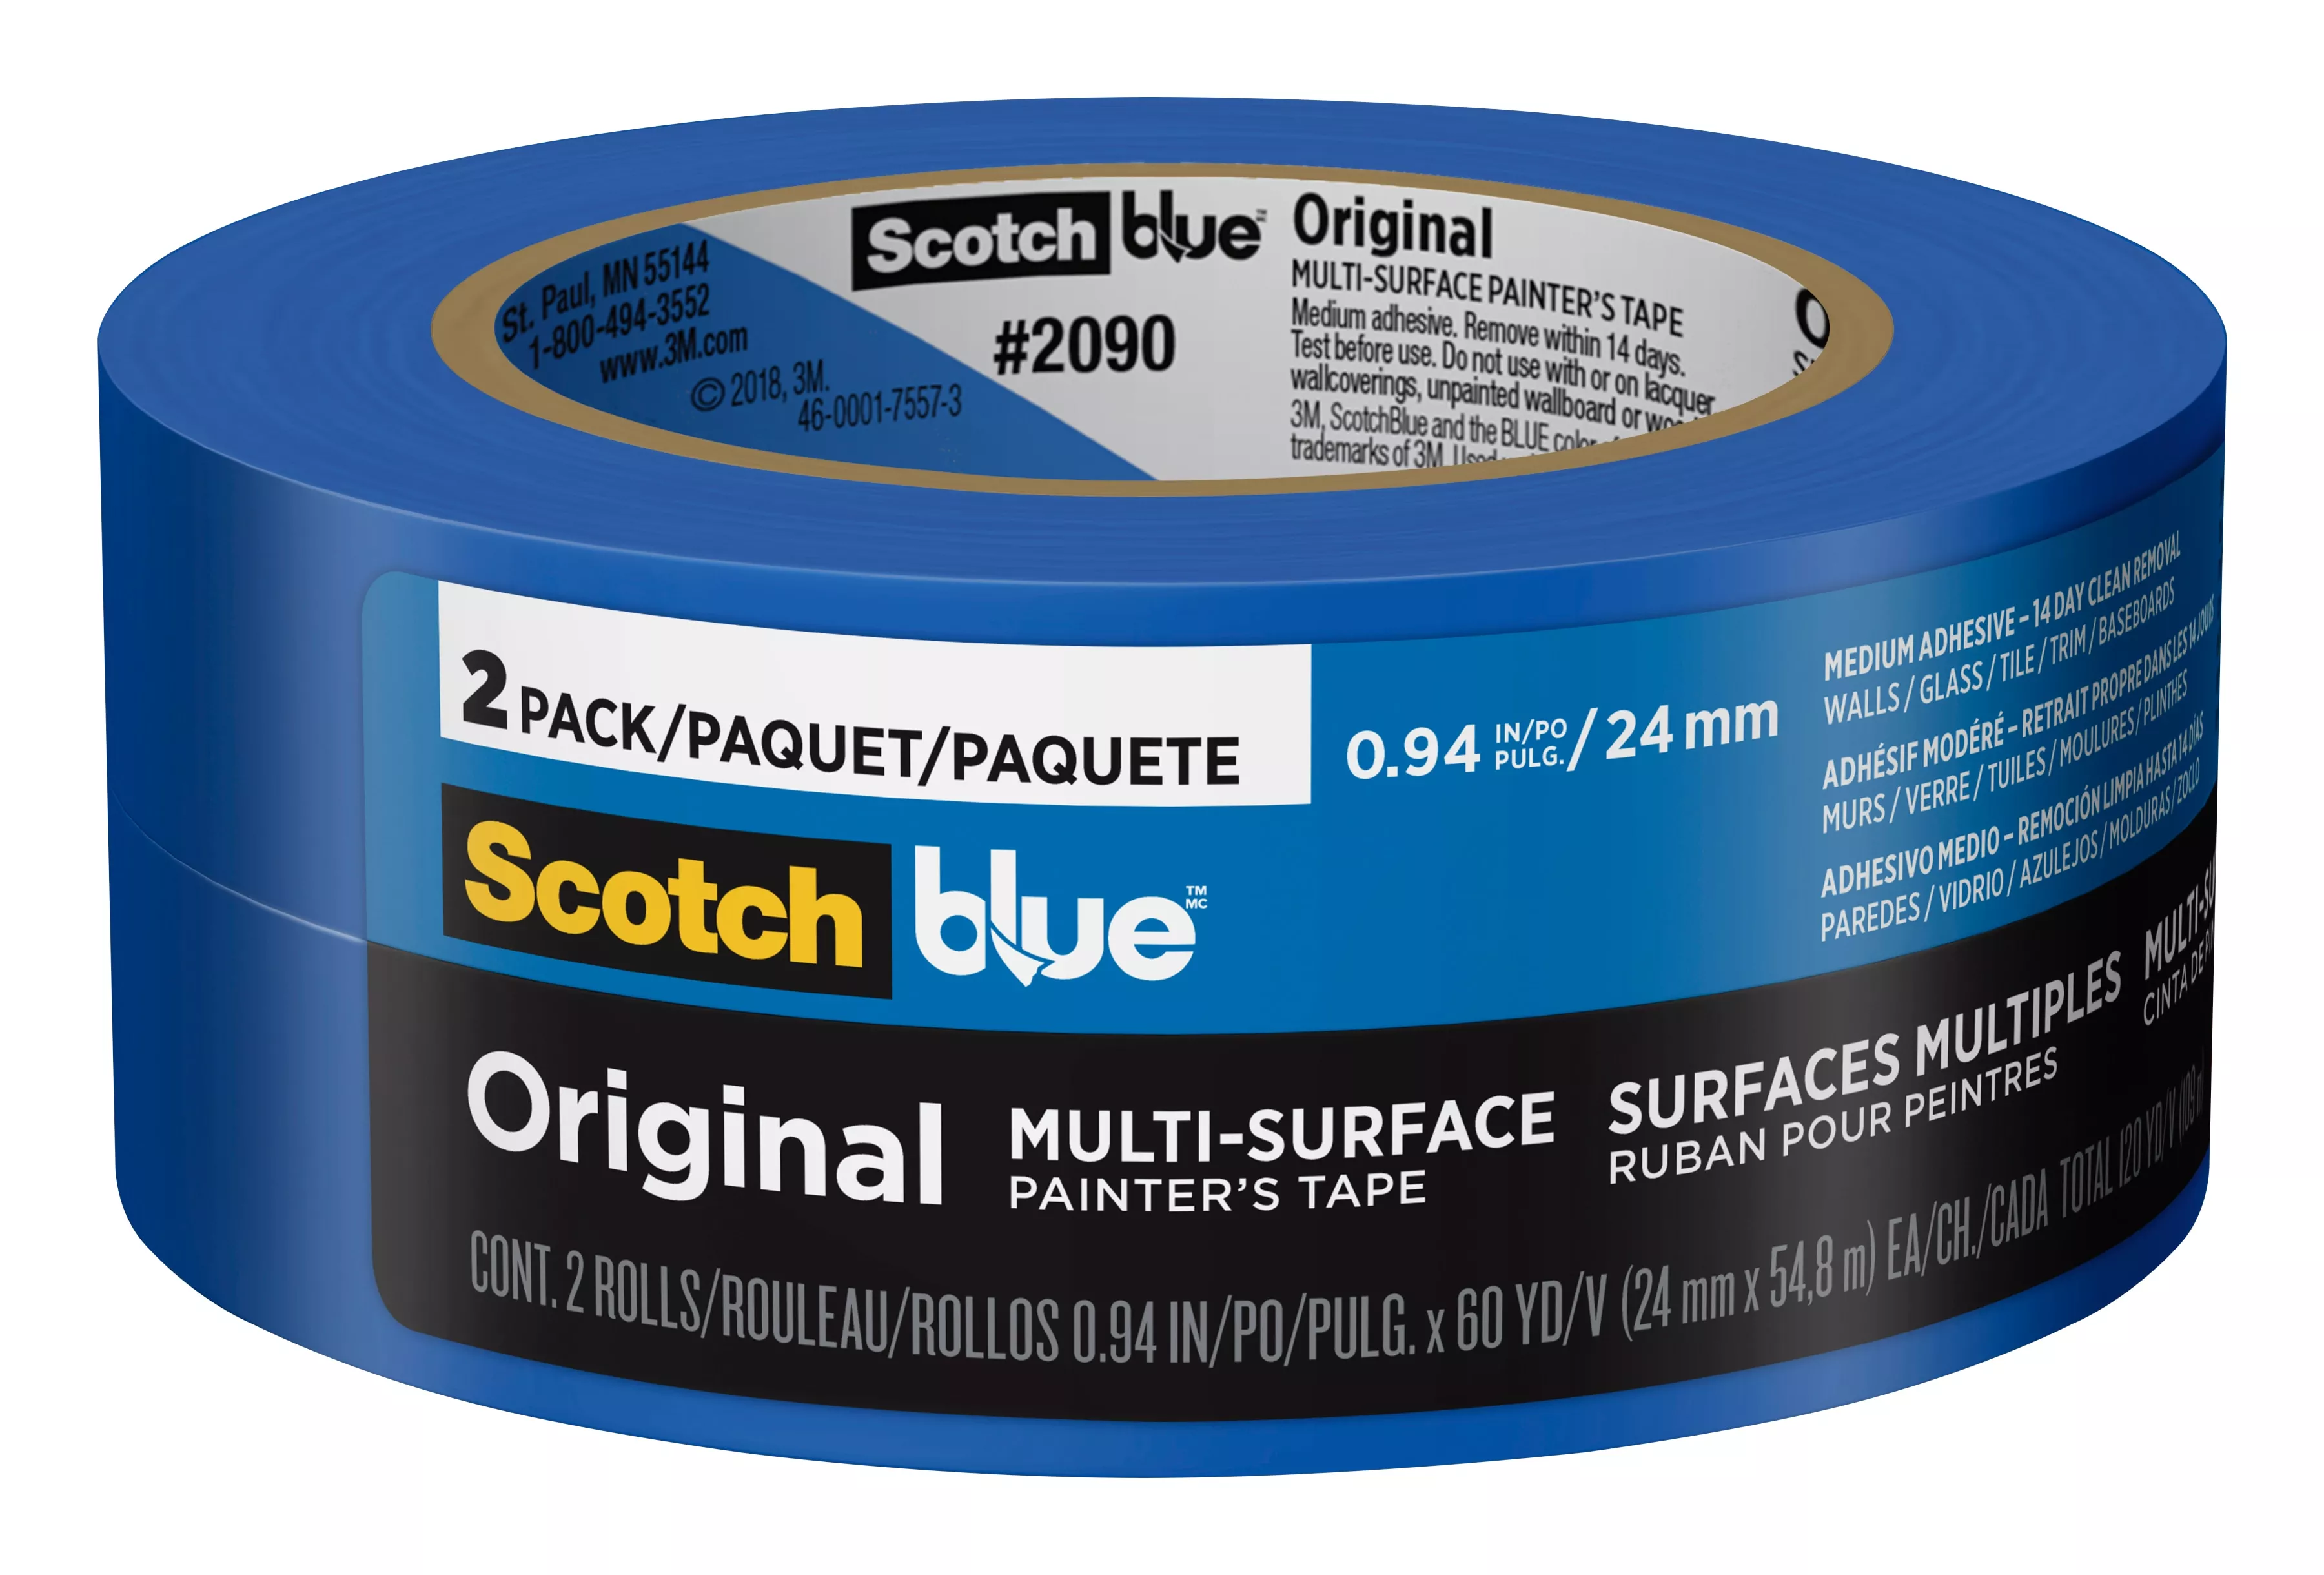 ScotchBlue™ Original Painter's Tape 2090-24CC2, 0.94 in x 60 yd (24mm x
54,8m), 2rolls /pack